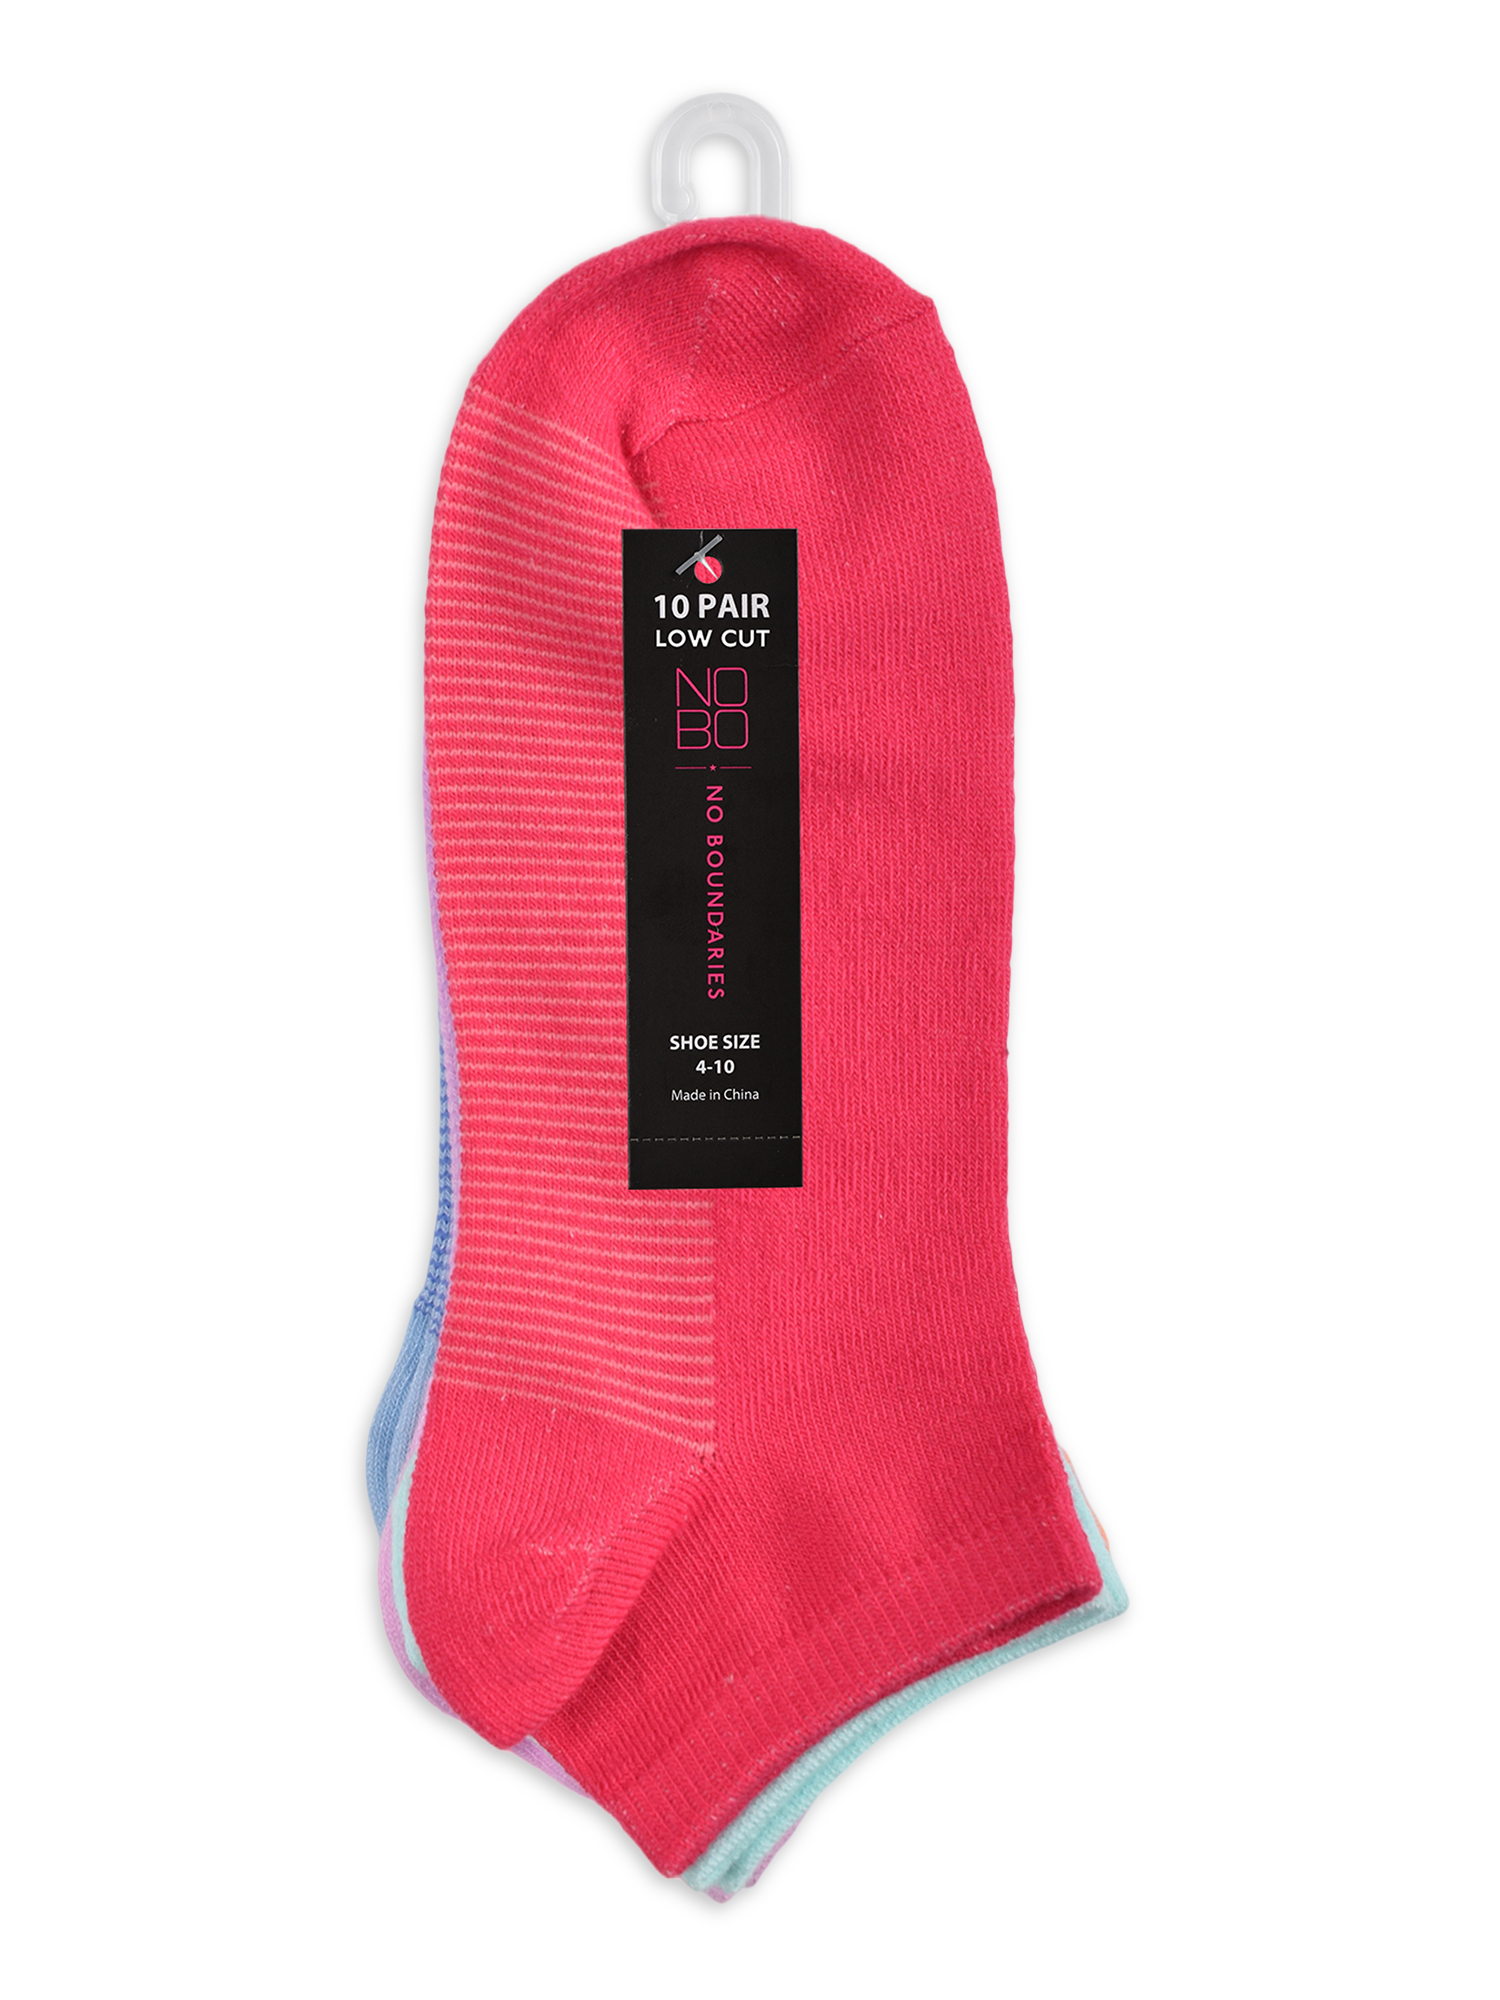 No Boundaries Women's Low-Cut Socks, 10-Pack, Sizes 4-10 - image 2 of 5